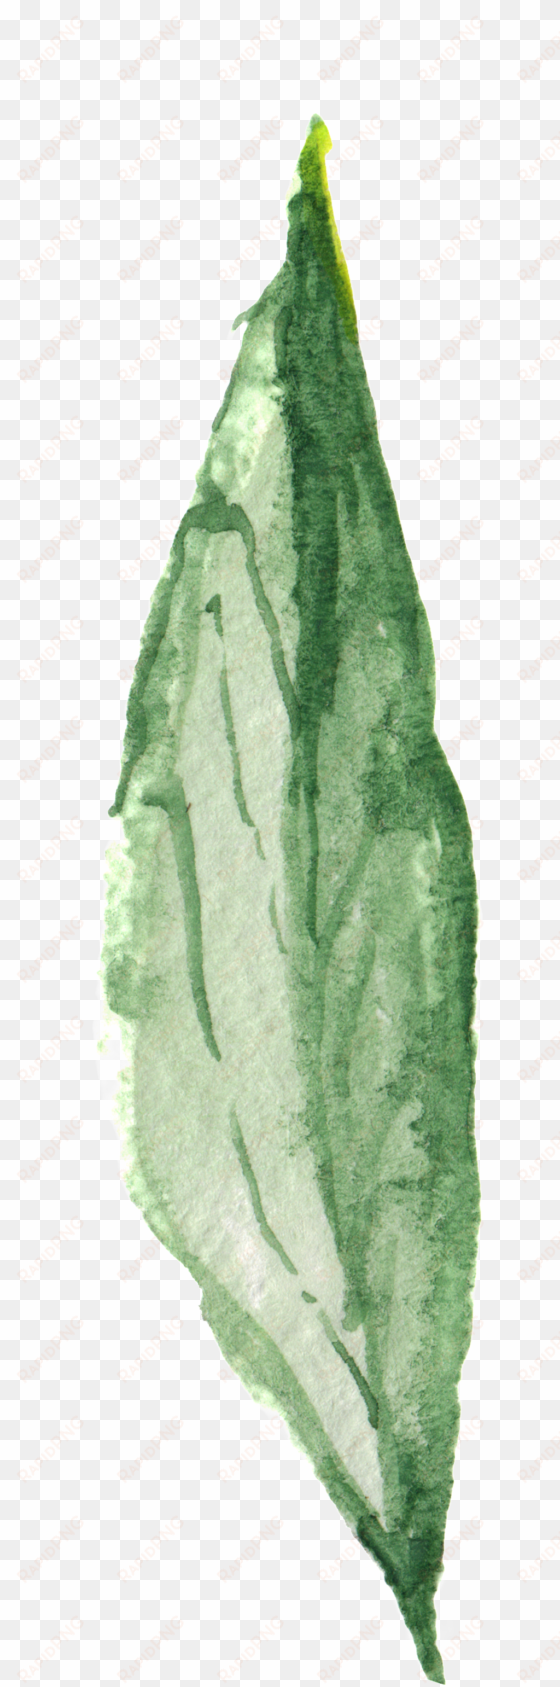 plant green leaf transparent decorative - green